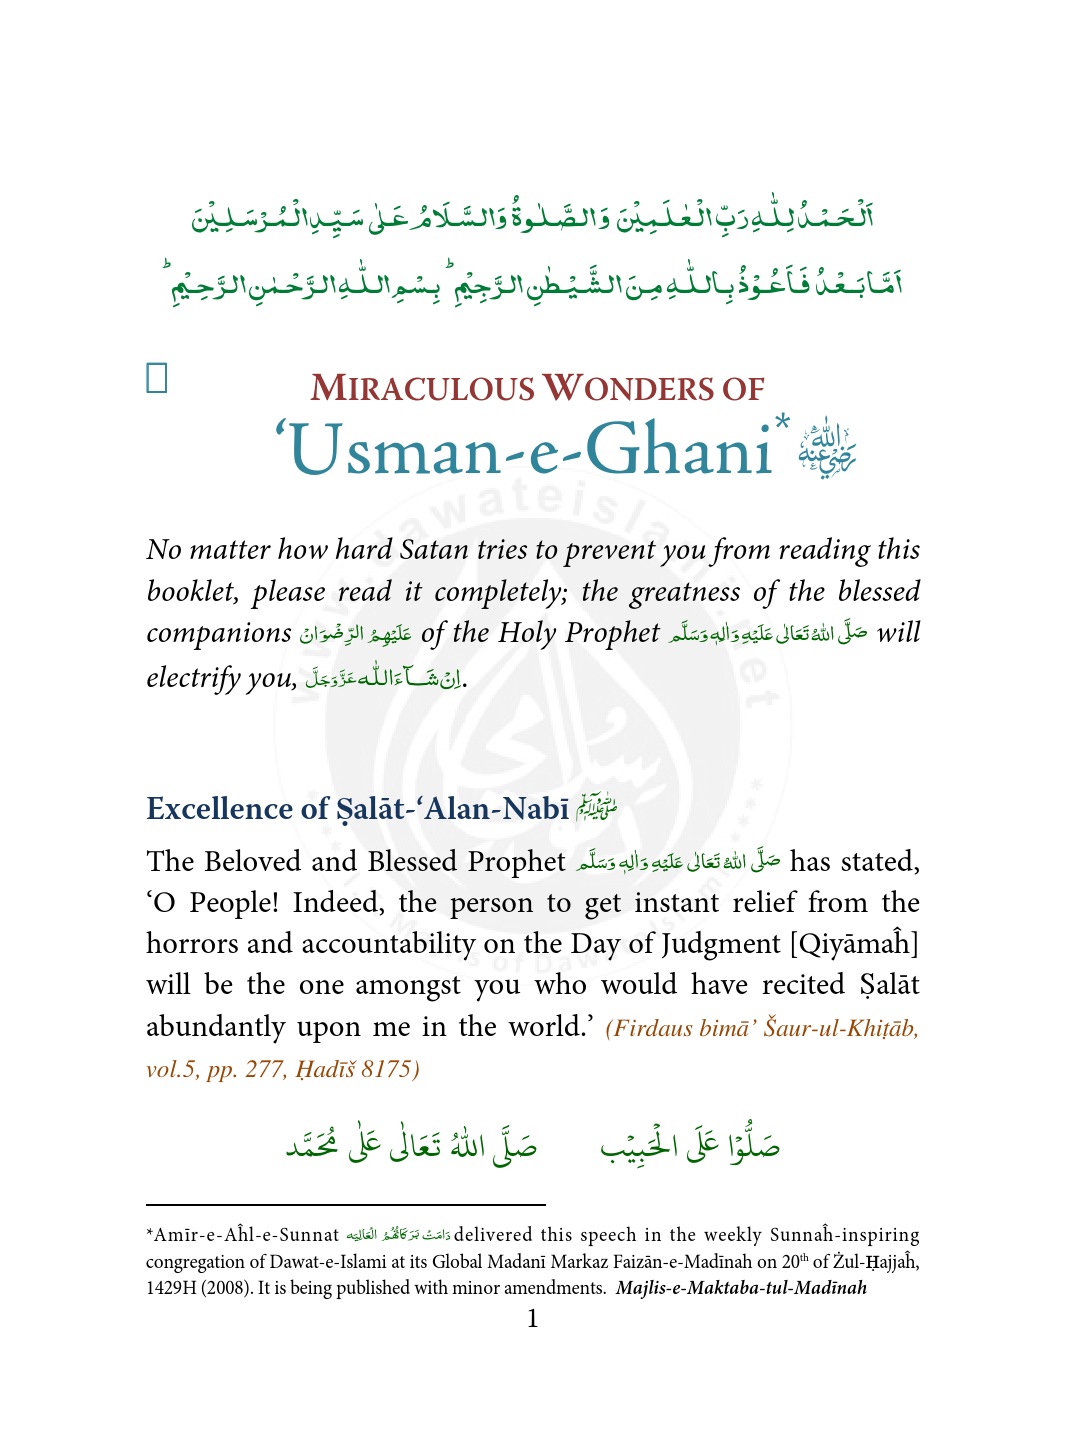 MiraculousWondersOfUsman-e-ghani.pdf, 42- pages 